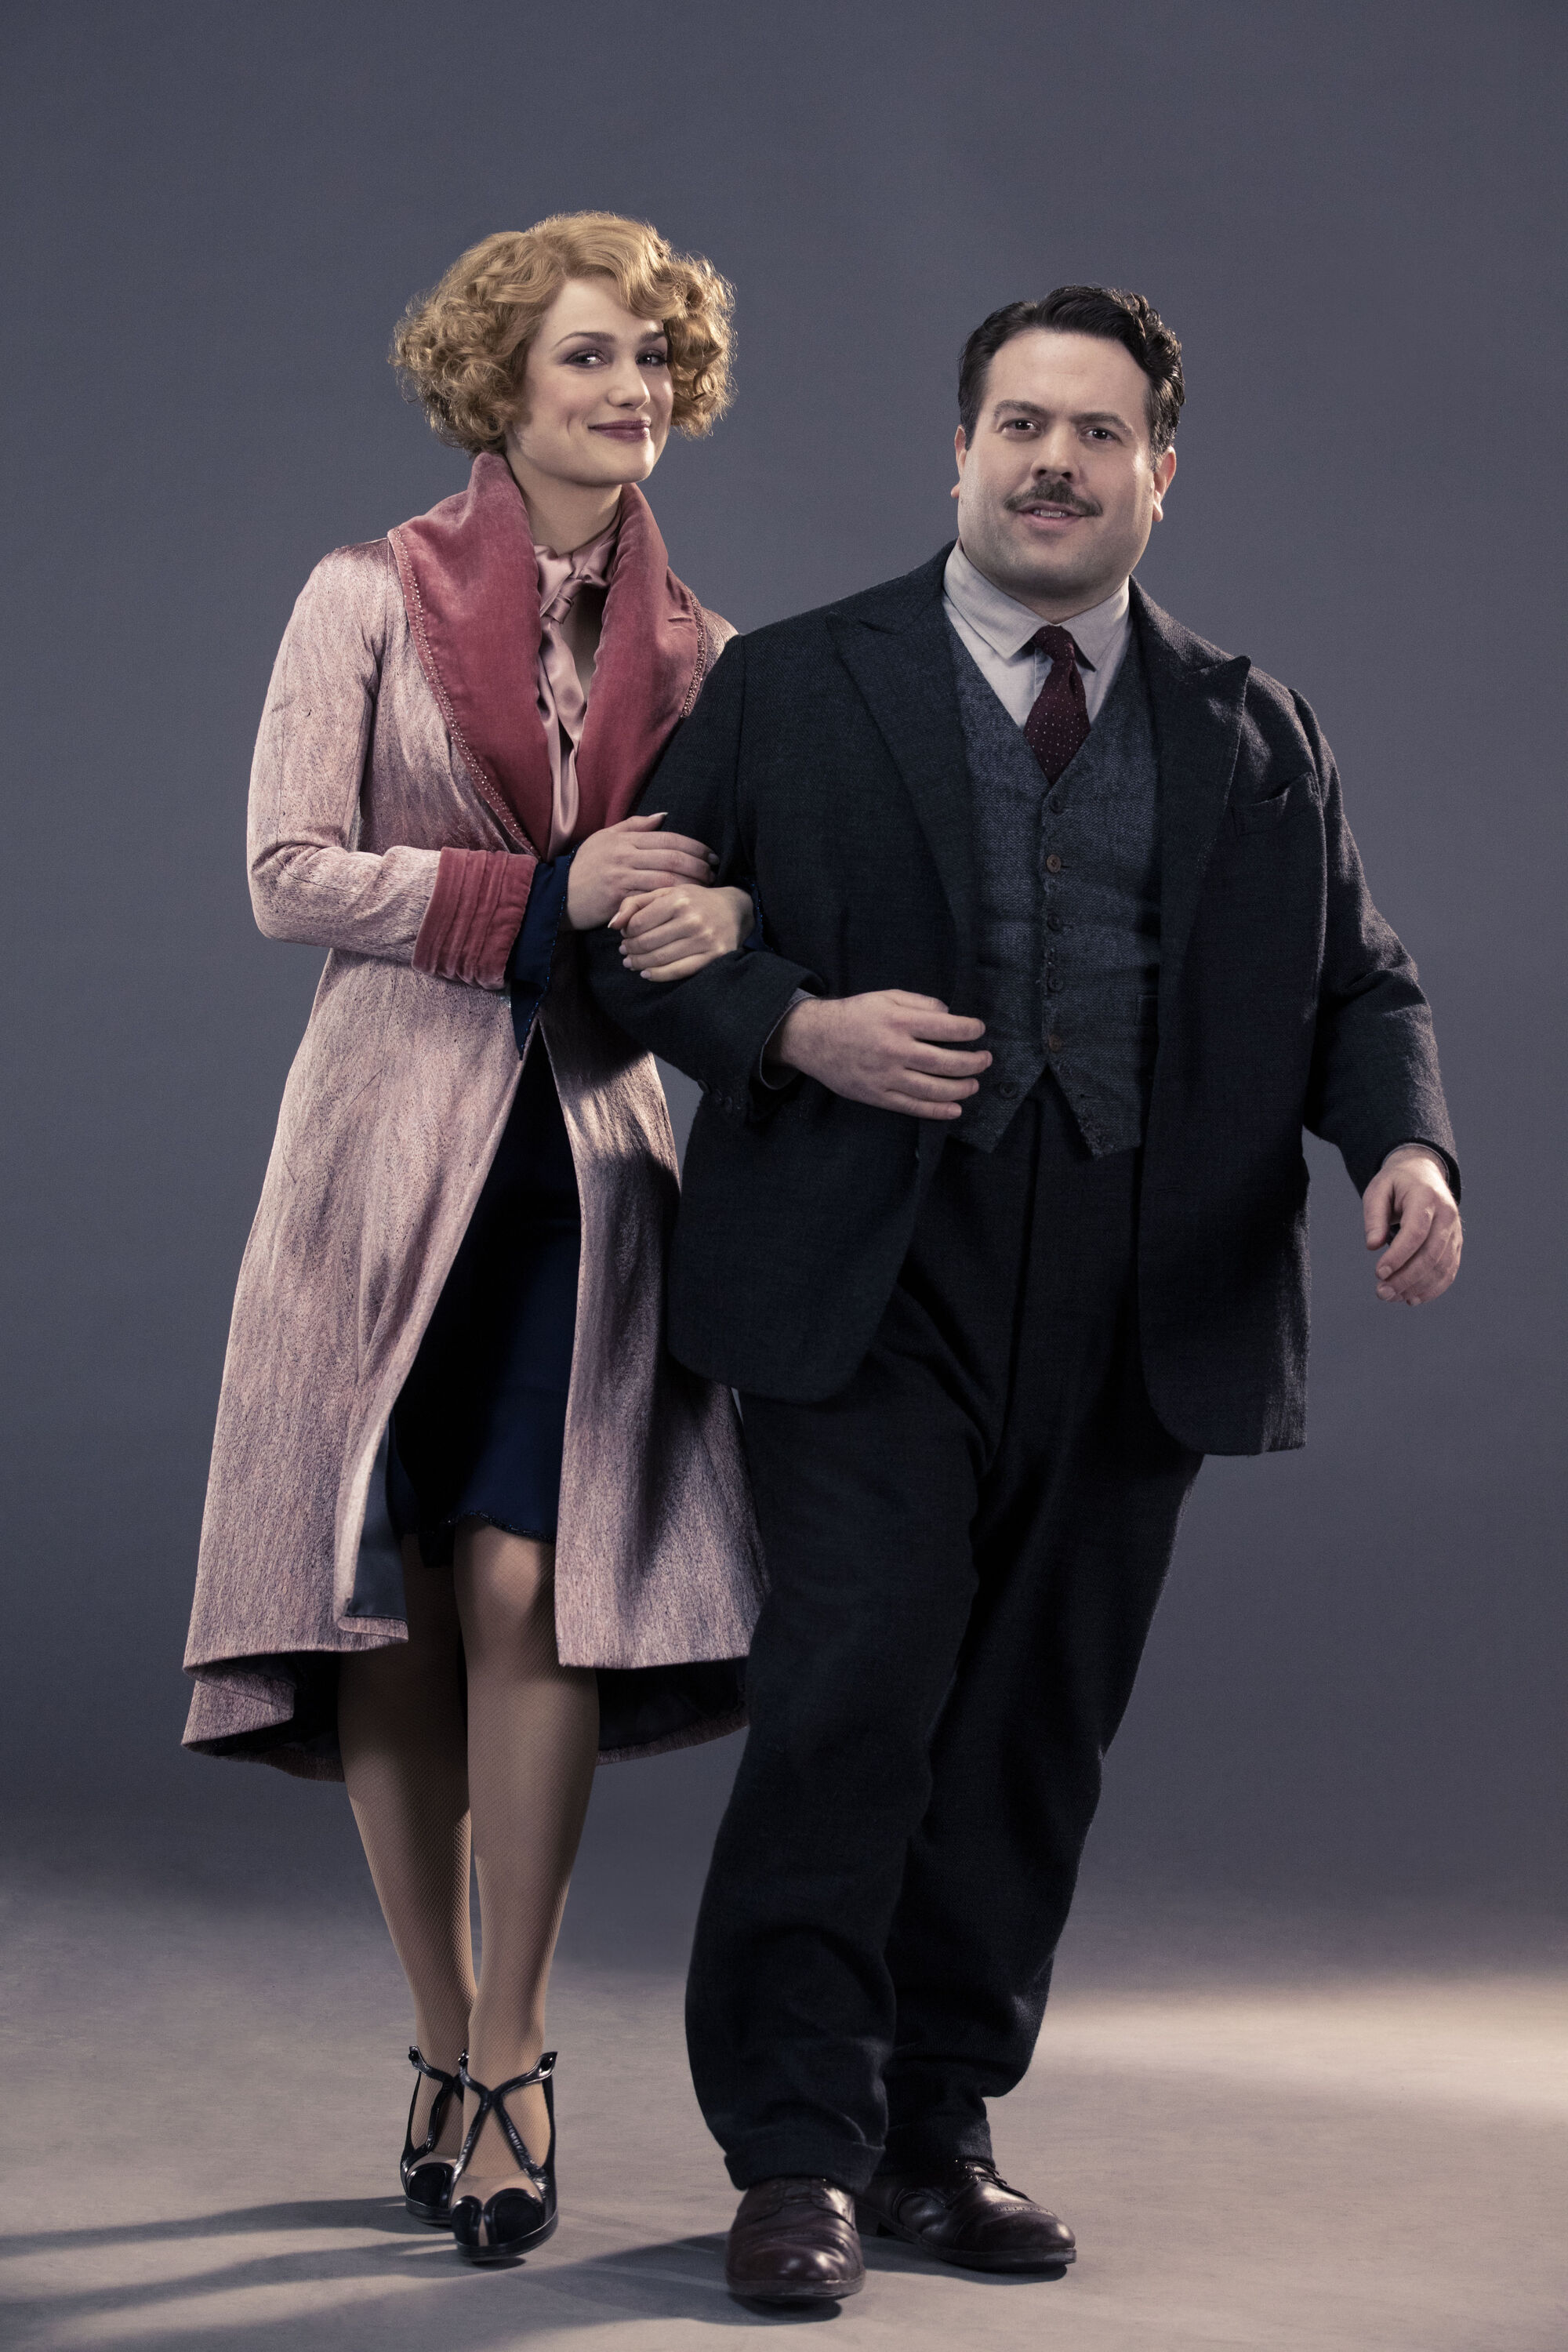 Image - Queenie and Jacob.jpg | Harry Potter Wiki | Fandom powered by Wikia